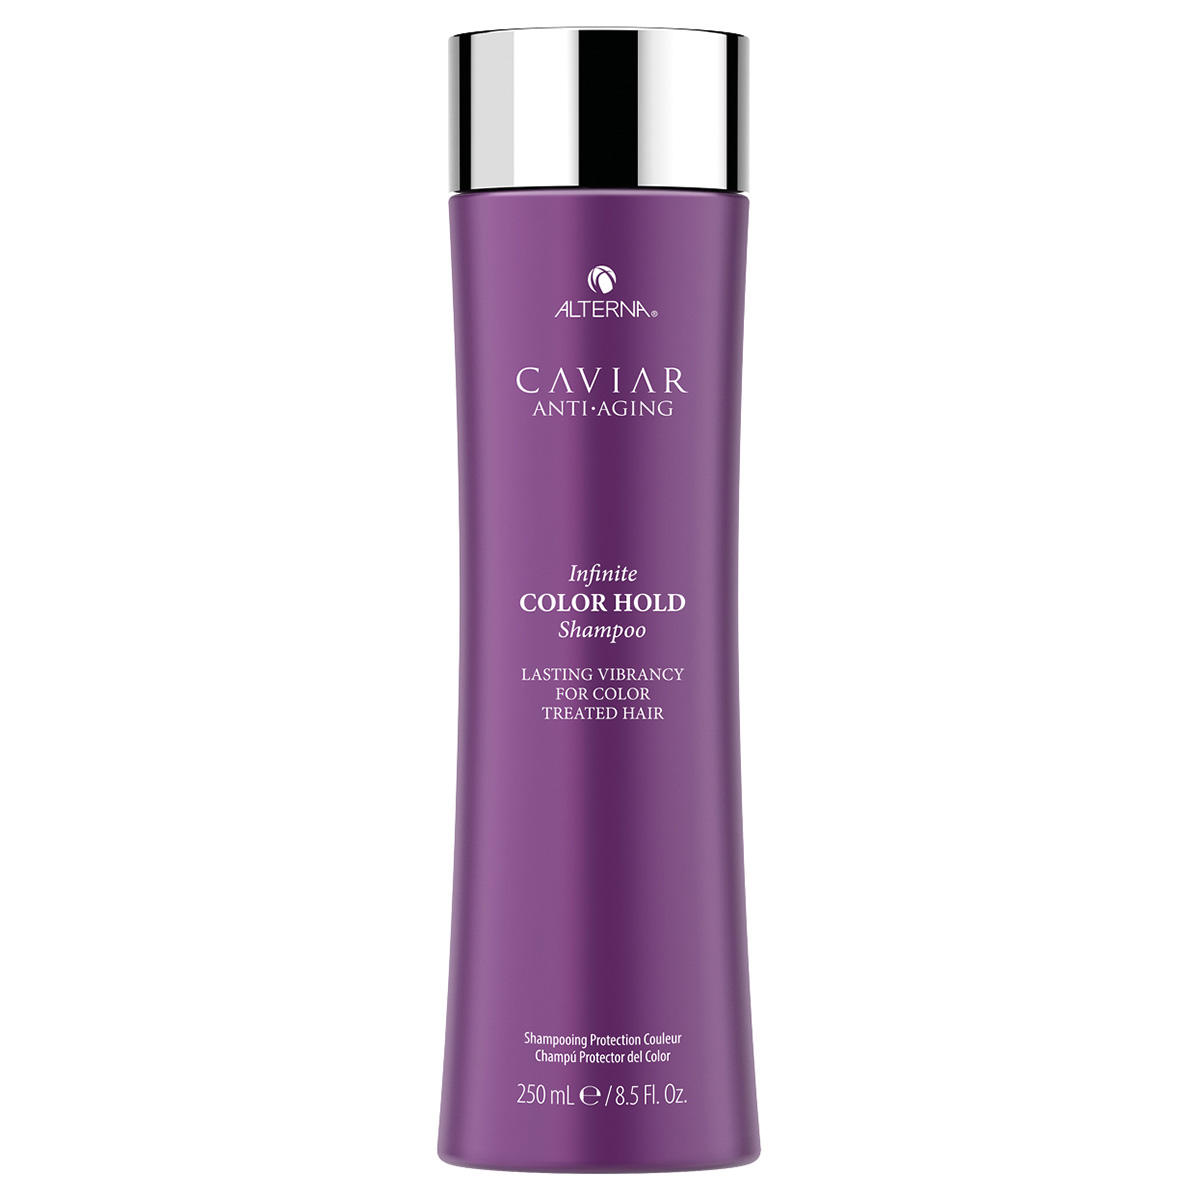 Alterna Caviar Anti-Aging Infinite Color Hold Shampoo  - 1